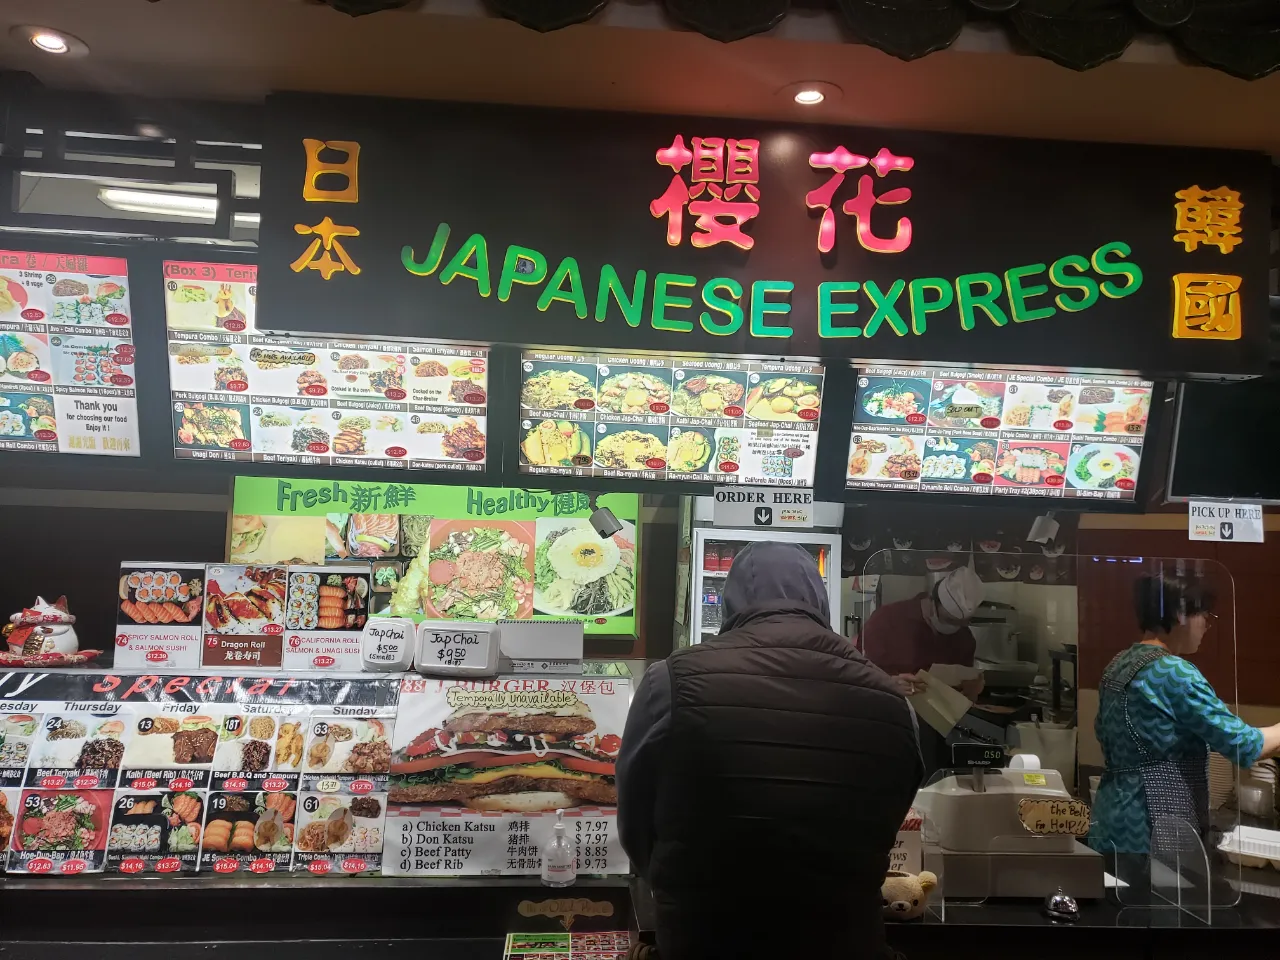 Japanese Express